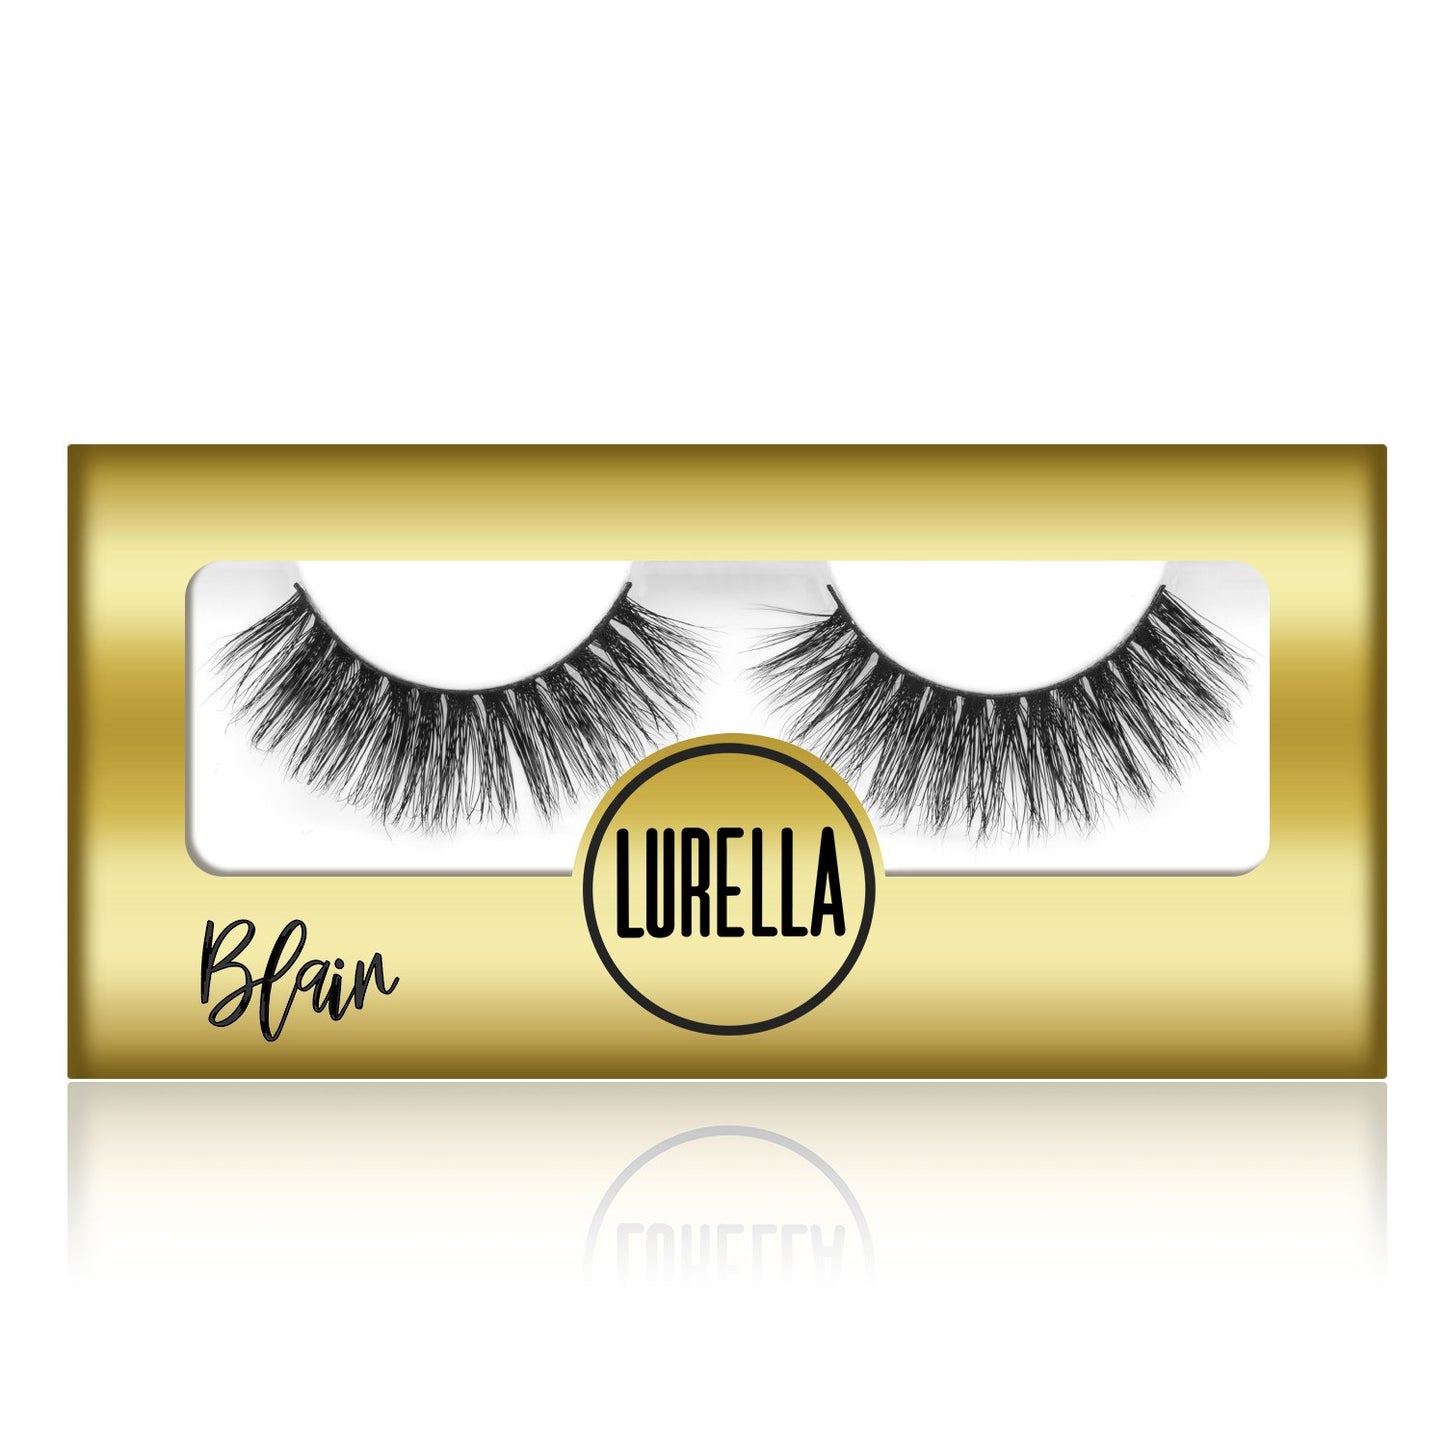 Blair - Lurella Cosmetics